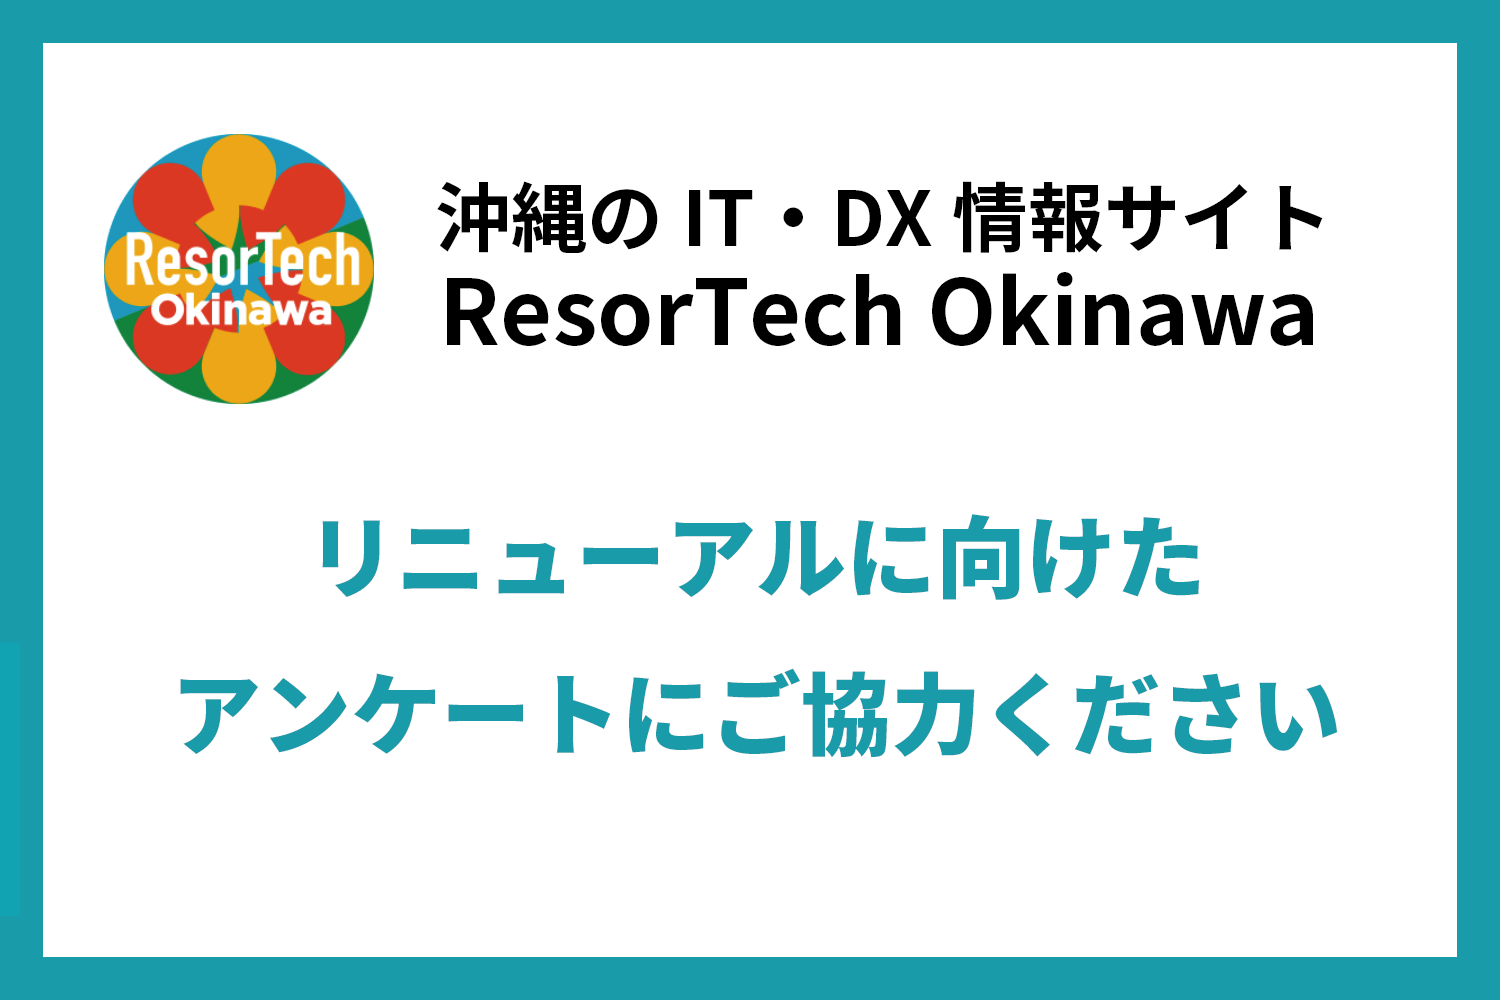 ResorTech Okinawa ウェブサイトに関するアンケート